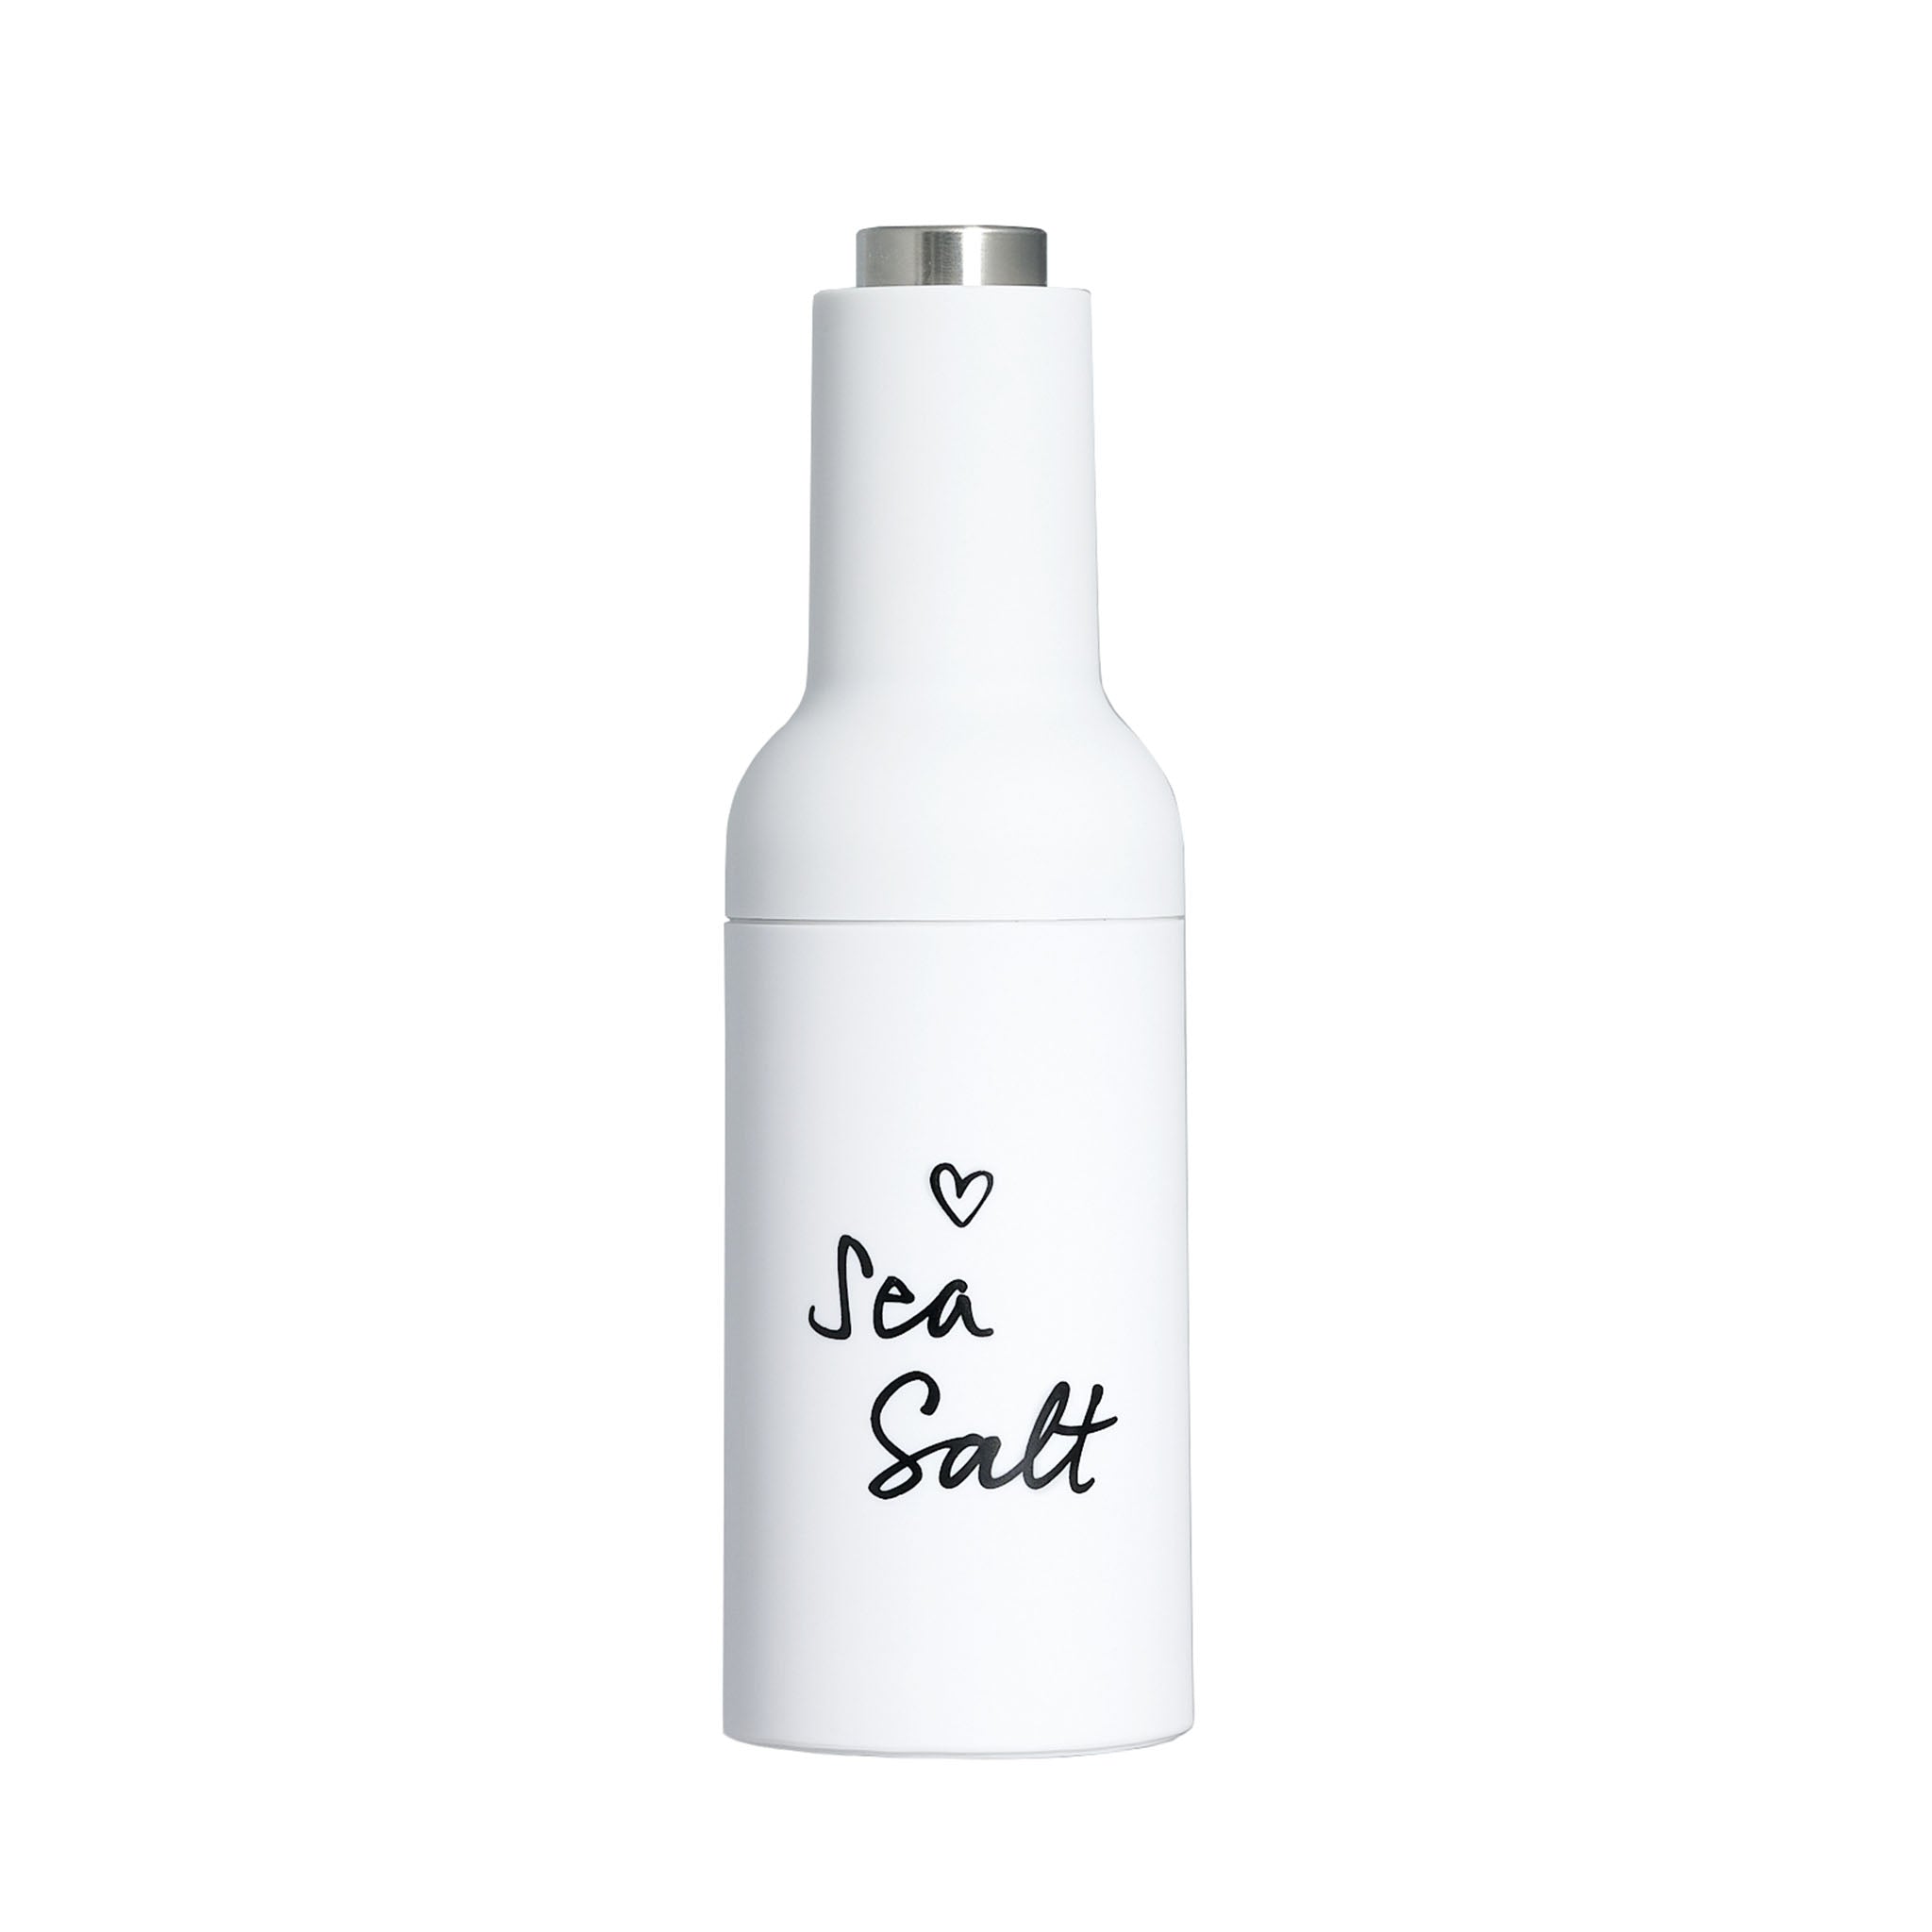 "Sea Salt" Electric Salt Grinder